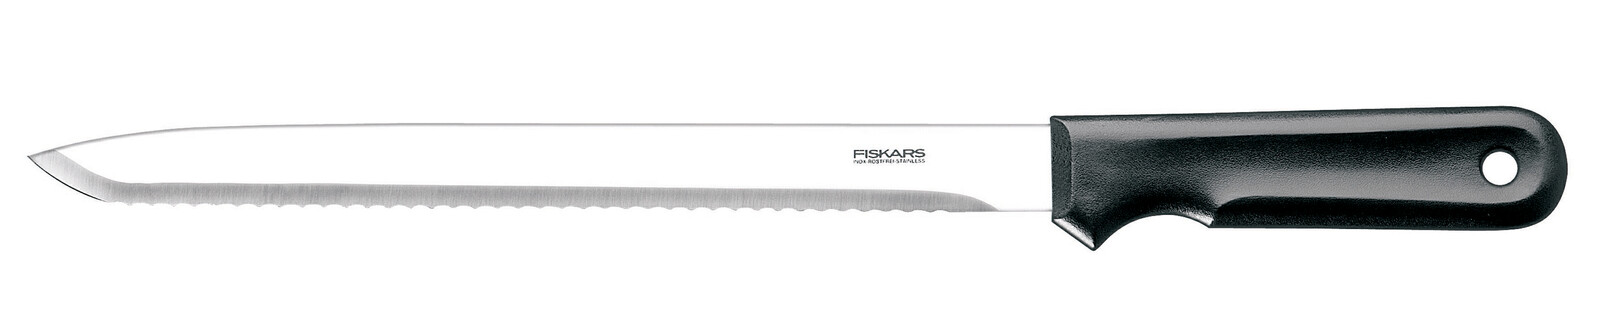 Нескладной нож Fiskars 1001626